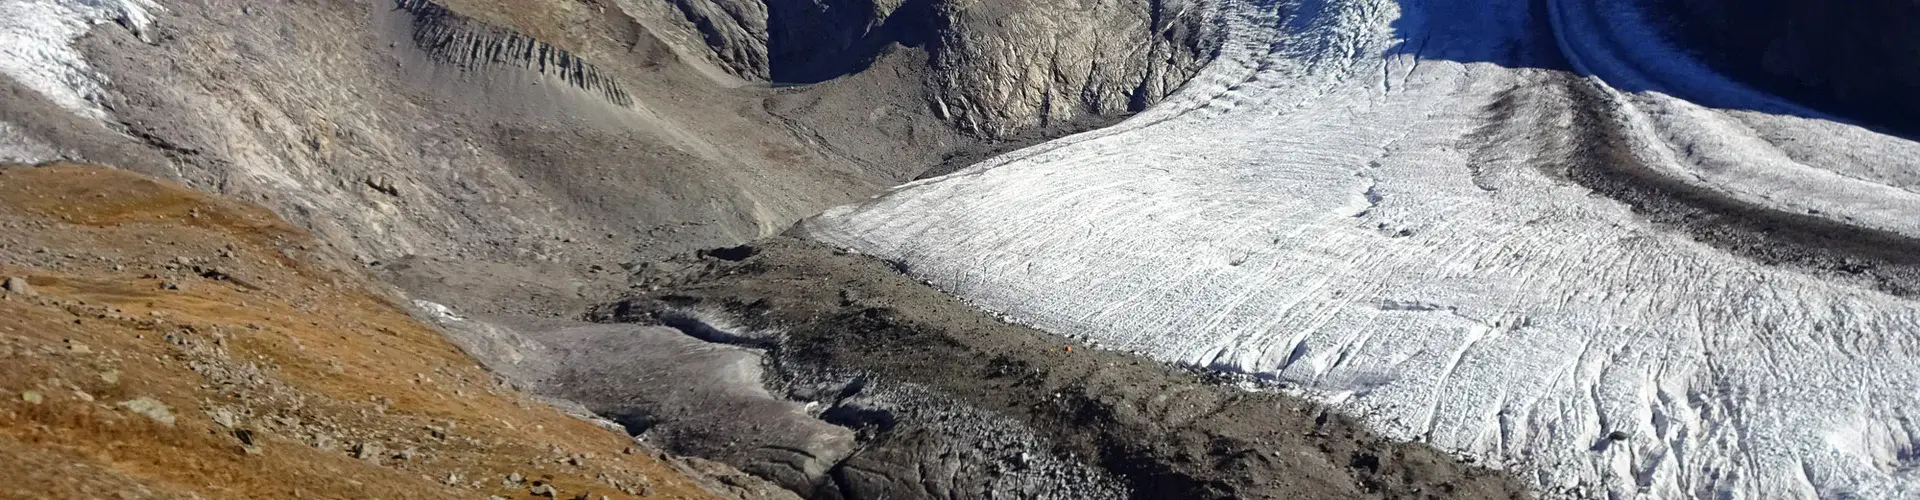 Gorner glacier, the second largest Alpine glacier, at the end of the summer of 2017 (Credit: M. Huss)